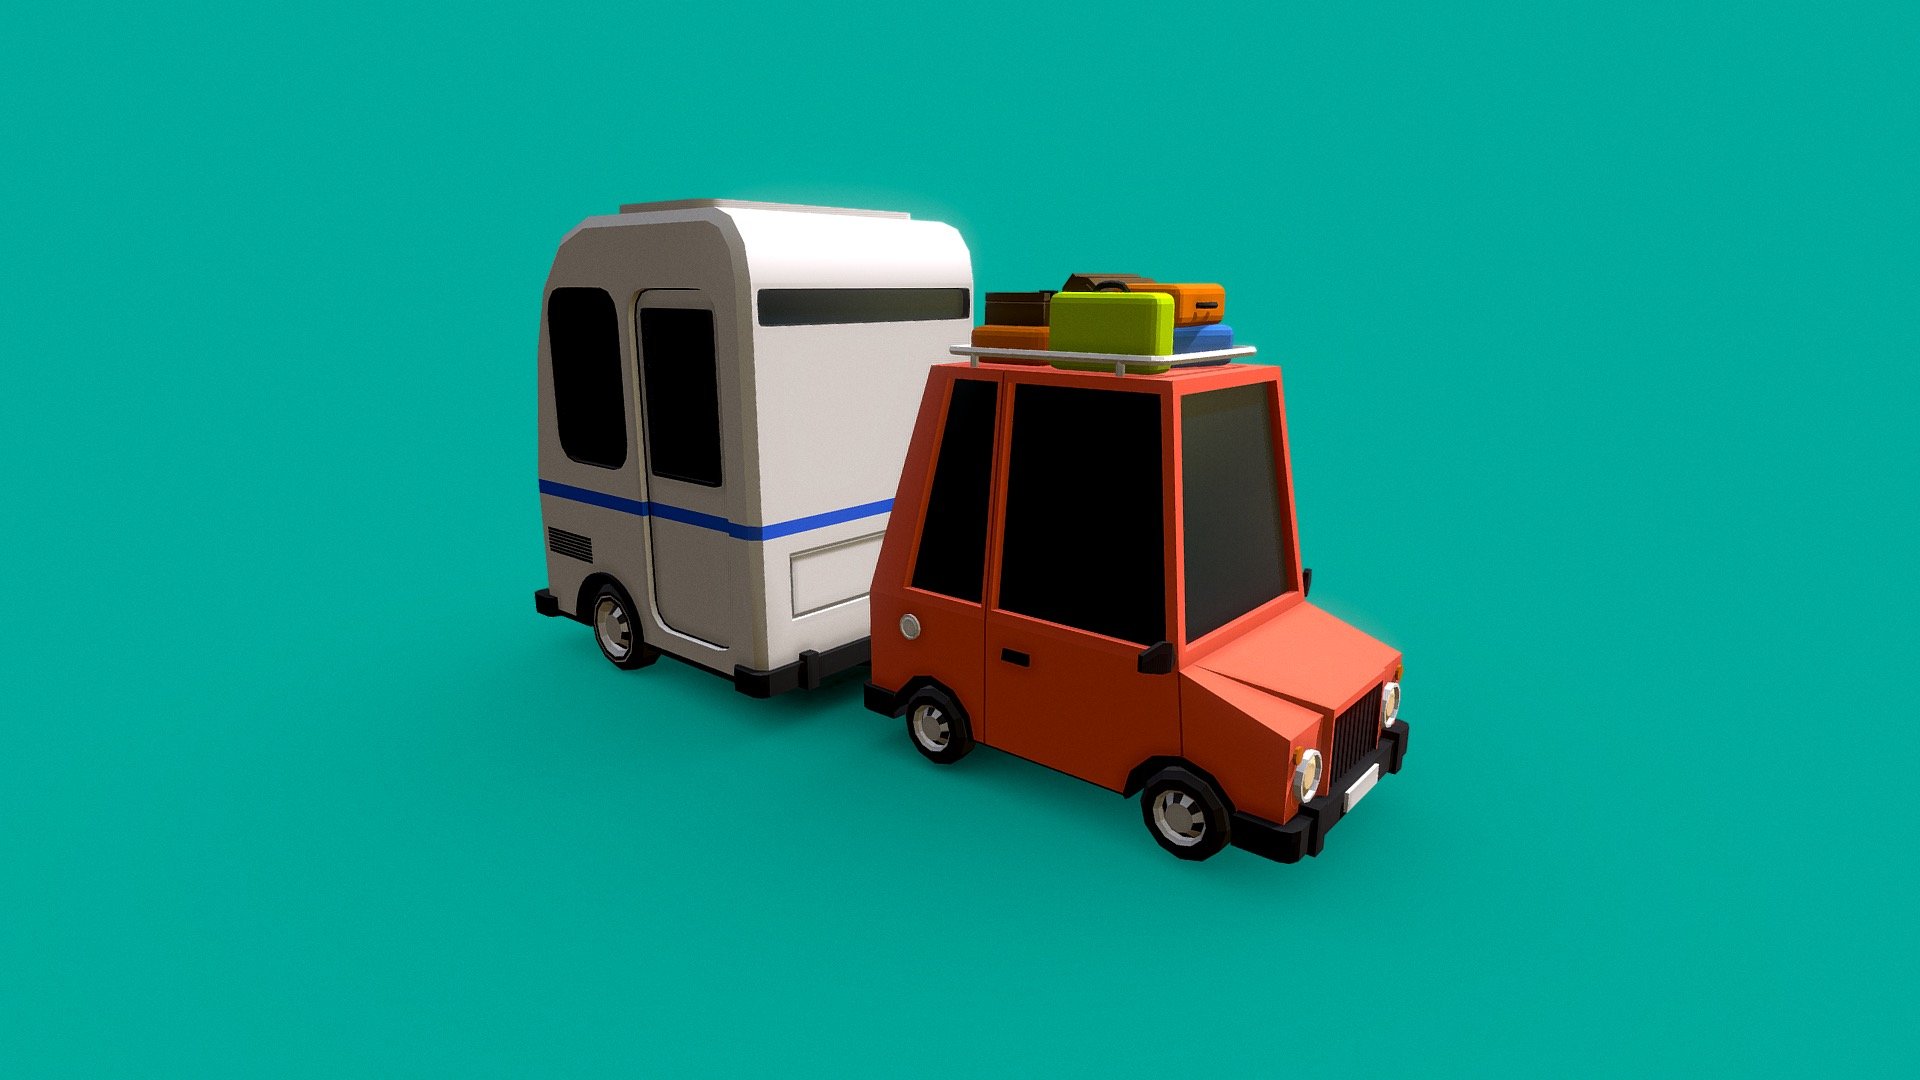 Low Poly Cartoon Car and Caravan (Made with Blender 2.83) - Low Poly Cartoon Car and Caravan - 3D model by Alkan Gözar (@alkangozar) 3d model